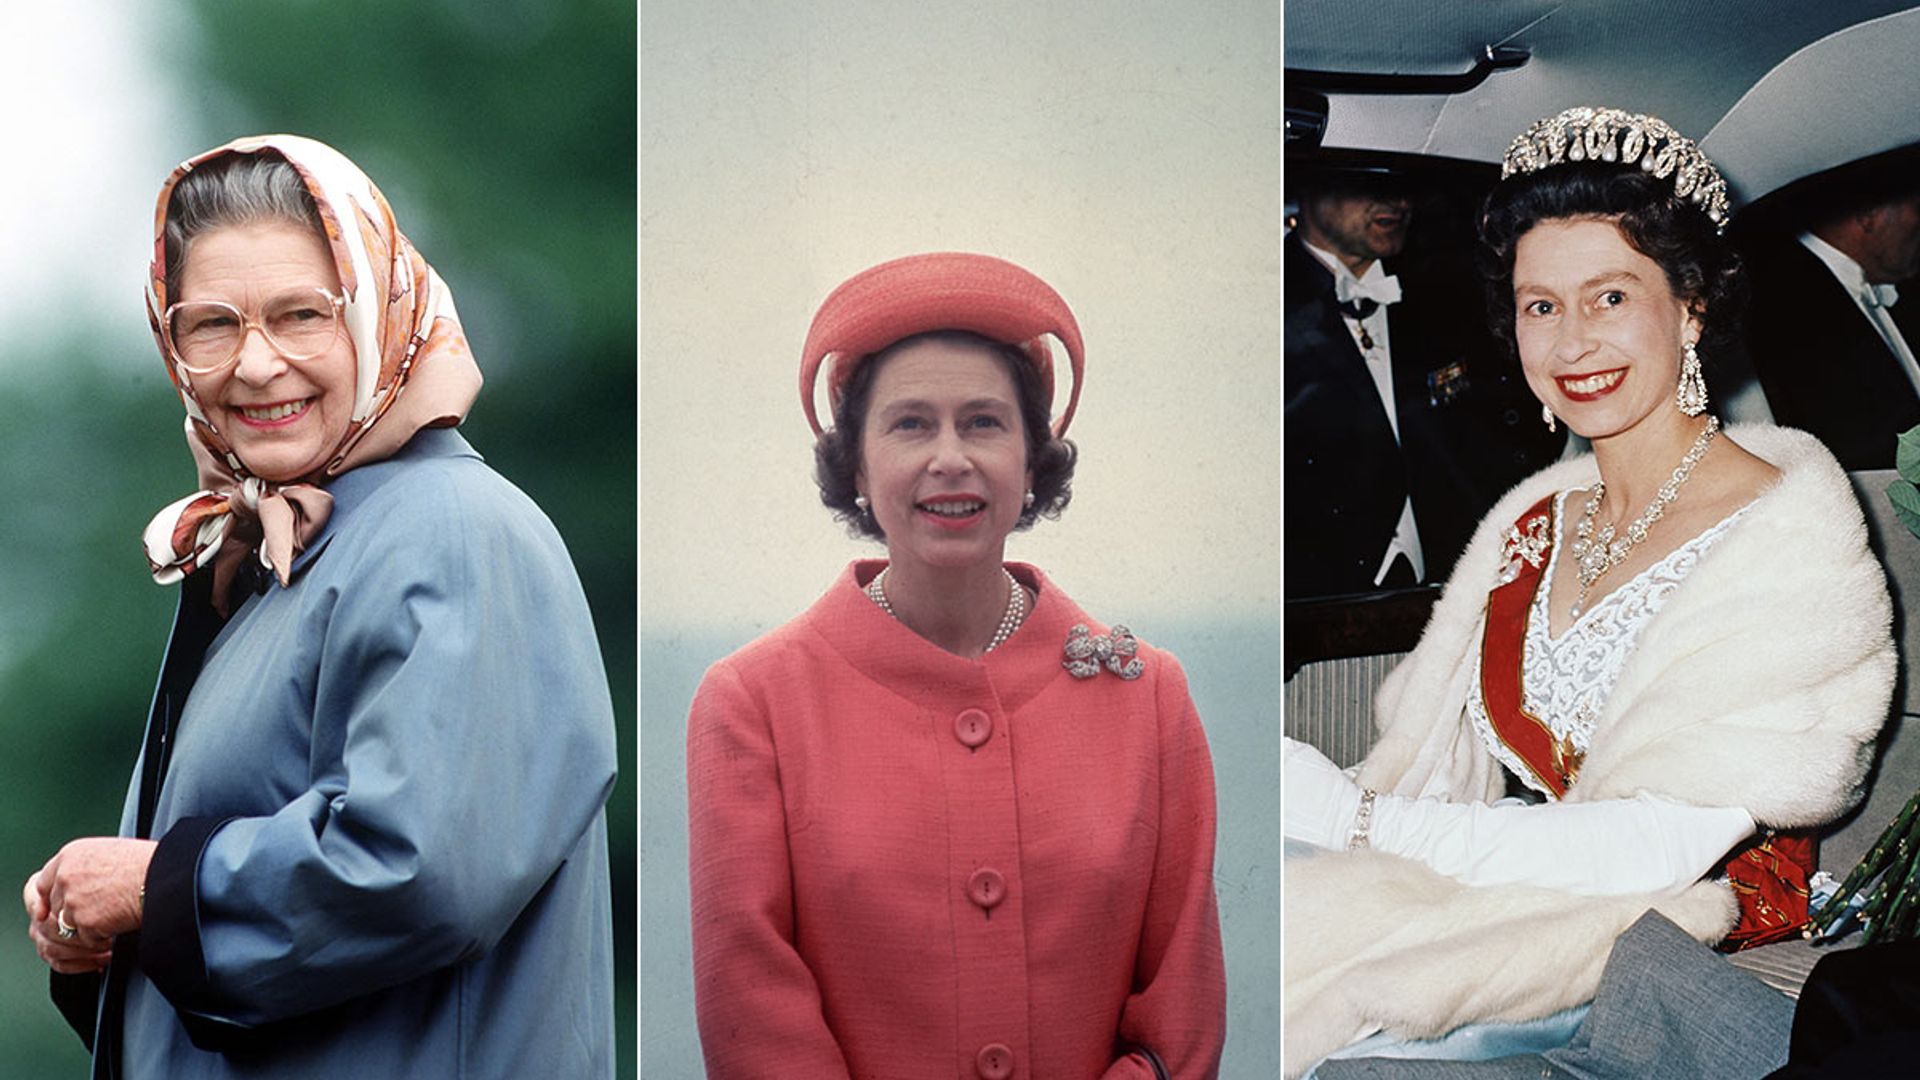 70 Best Royal Hats in History - Most Memorable Royal Family Fascinators